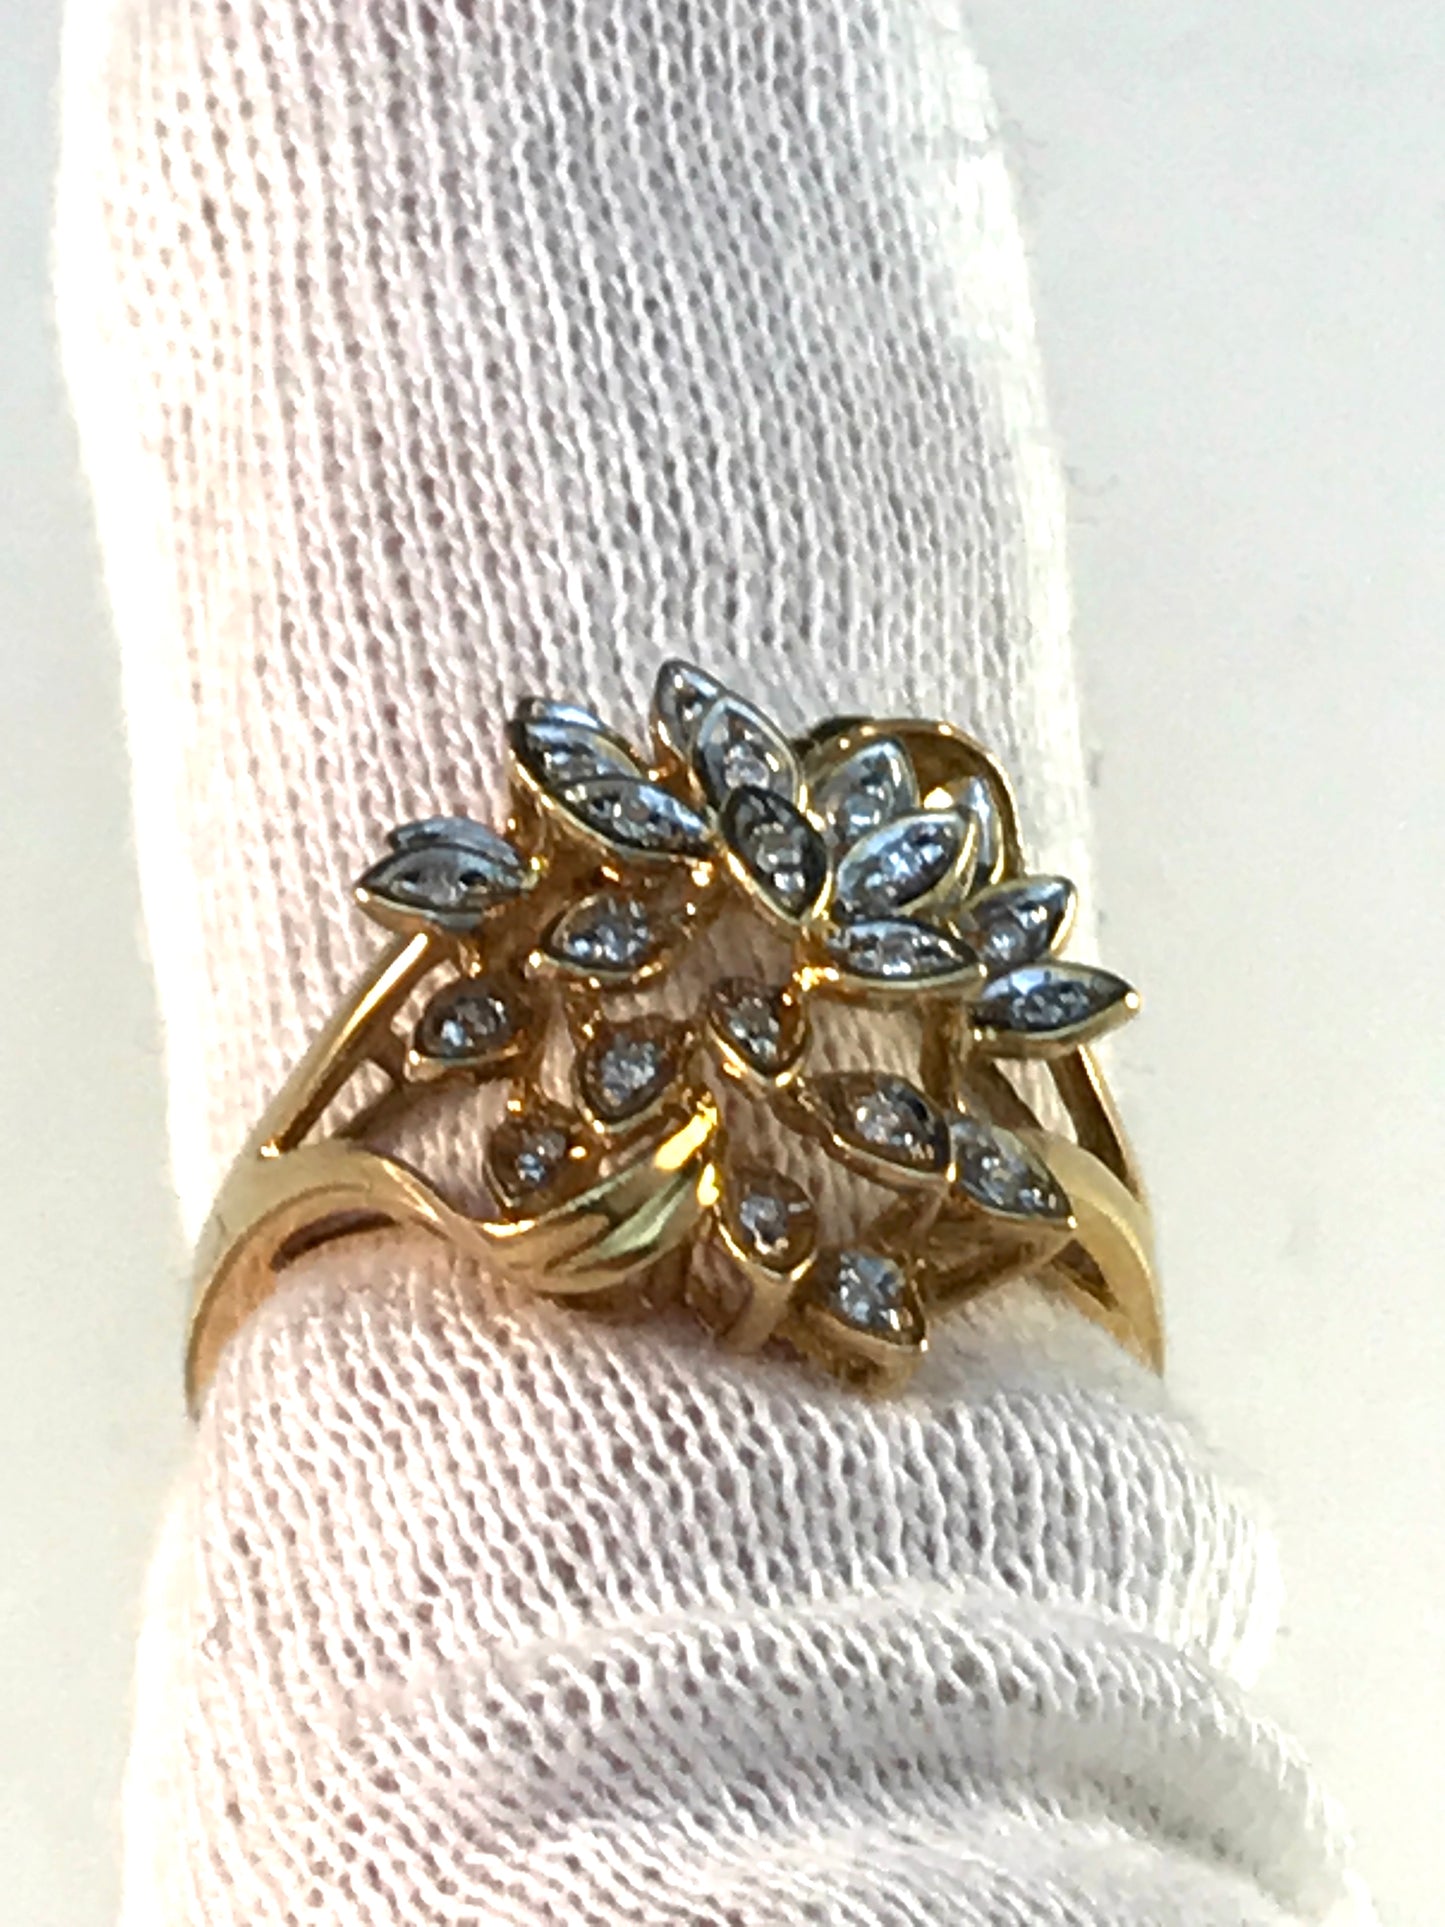 Vintage Mid Century 18k Gold Diamond Ring.